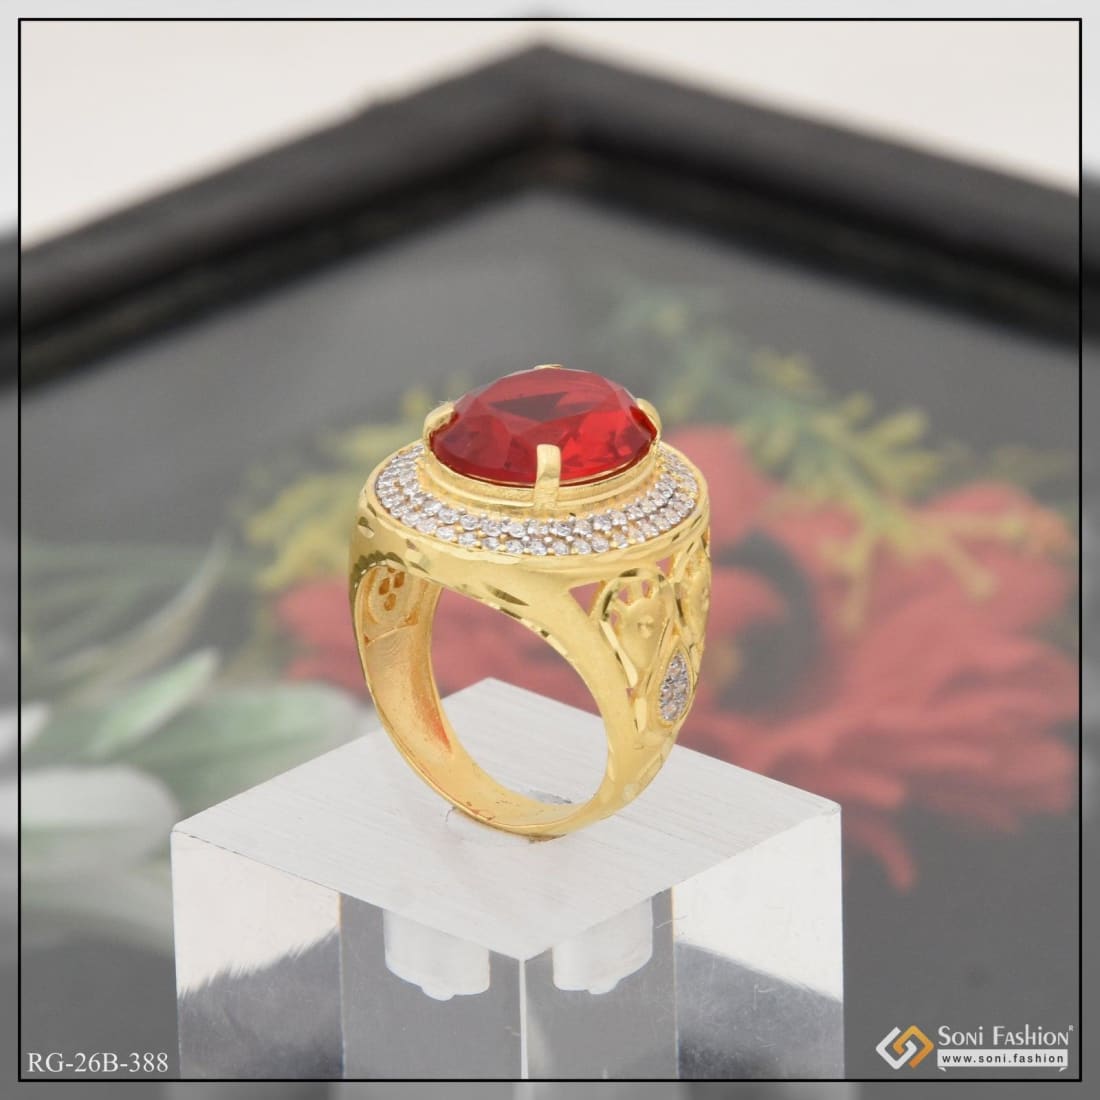 1 Gram Gold Forming Ganpati With Diamond Antique Design Ring For Men -  Style A891, सोने की अंगूठी - Soni Fashion, Rajkot | ID: 2849246115697